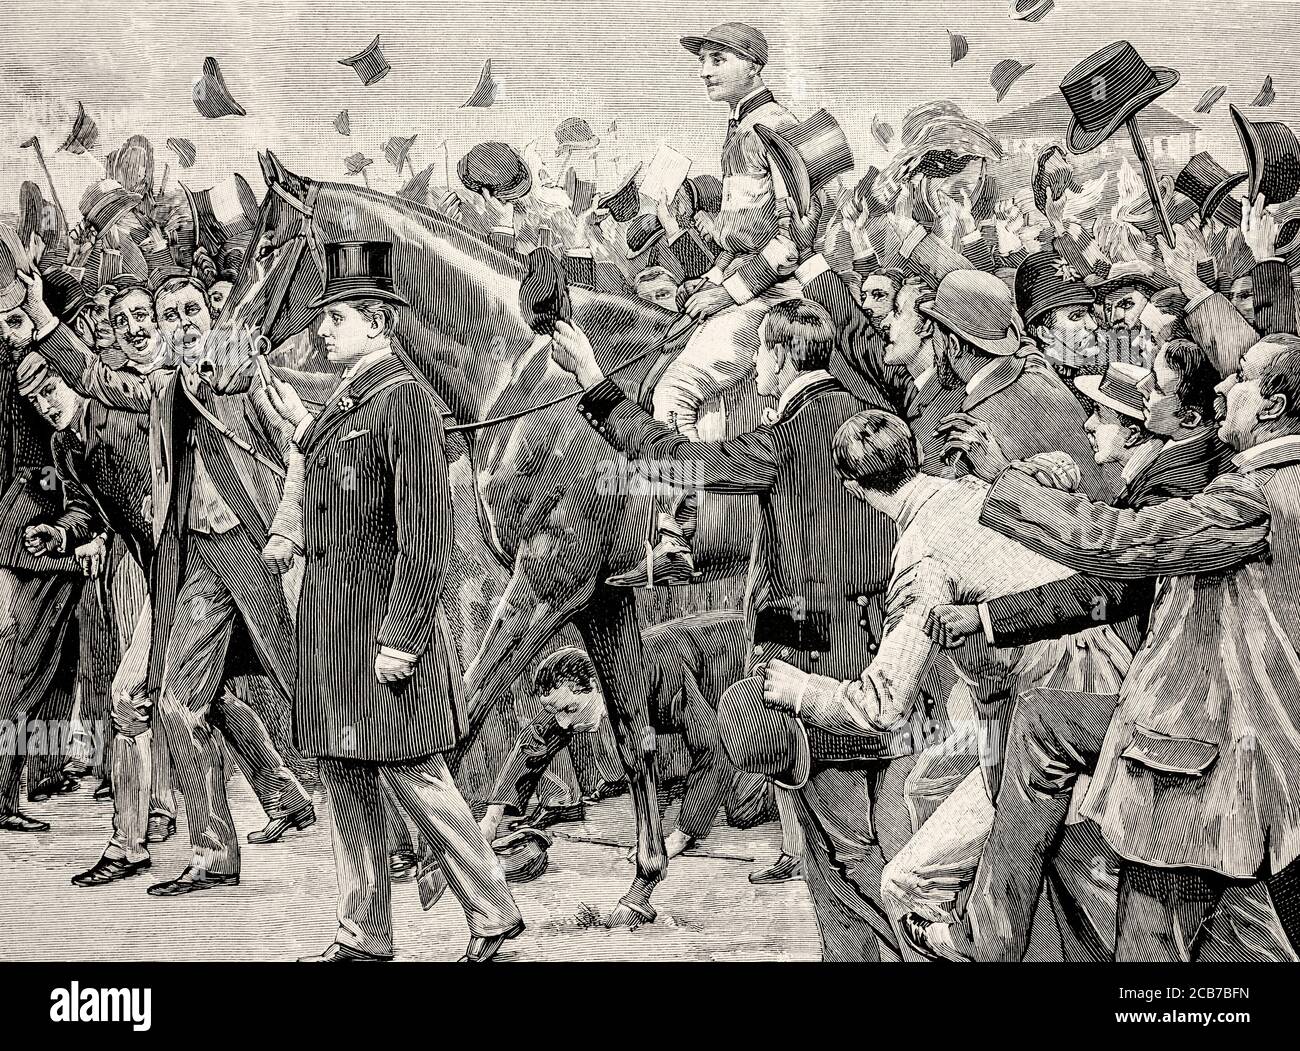 Horse Derby Race 1894, 19. Jahrhundert, England. Europa. Alte XIX Jahrhundert gravierte Illustration von La Ilustracion Española y Americana 1894 Stockfoto